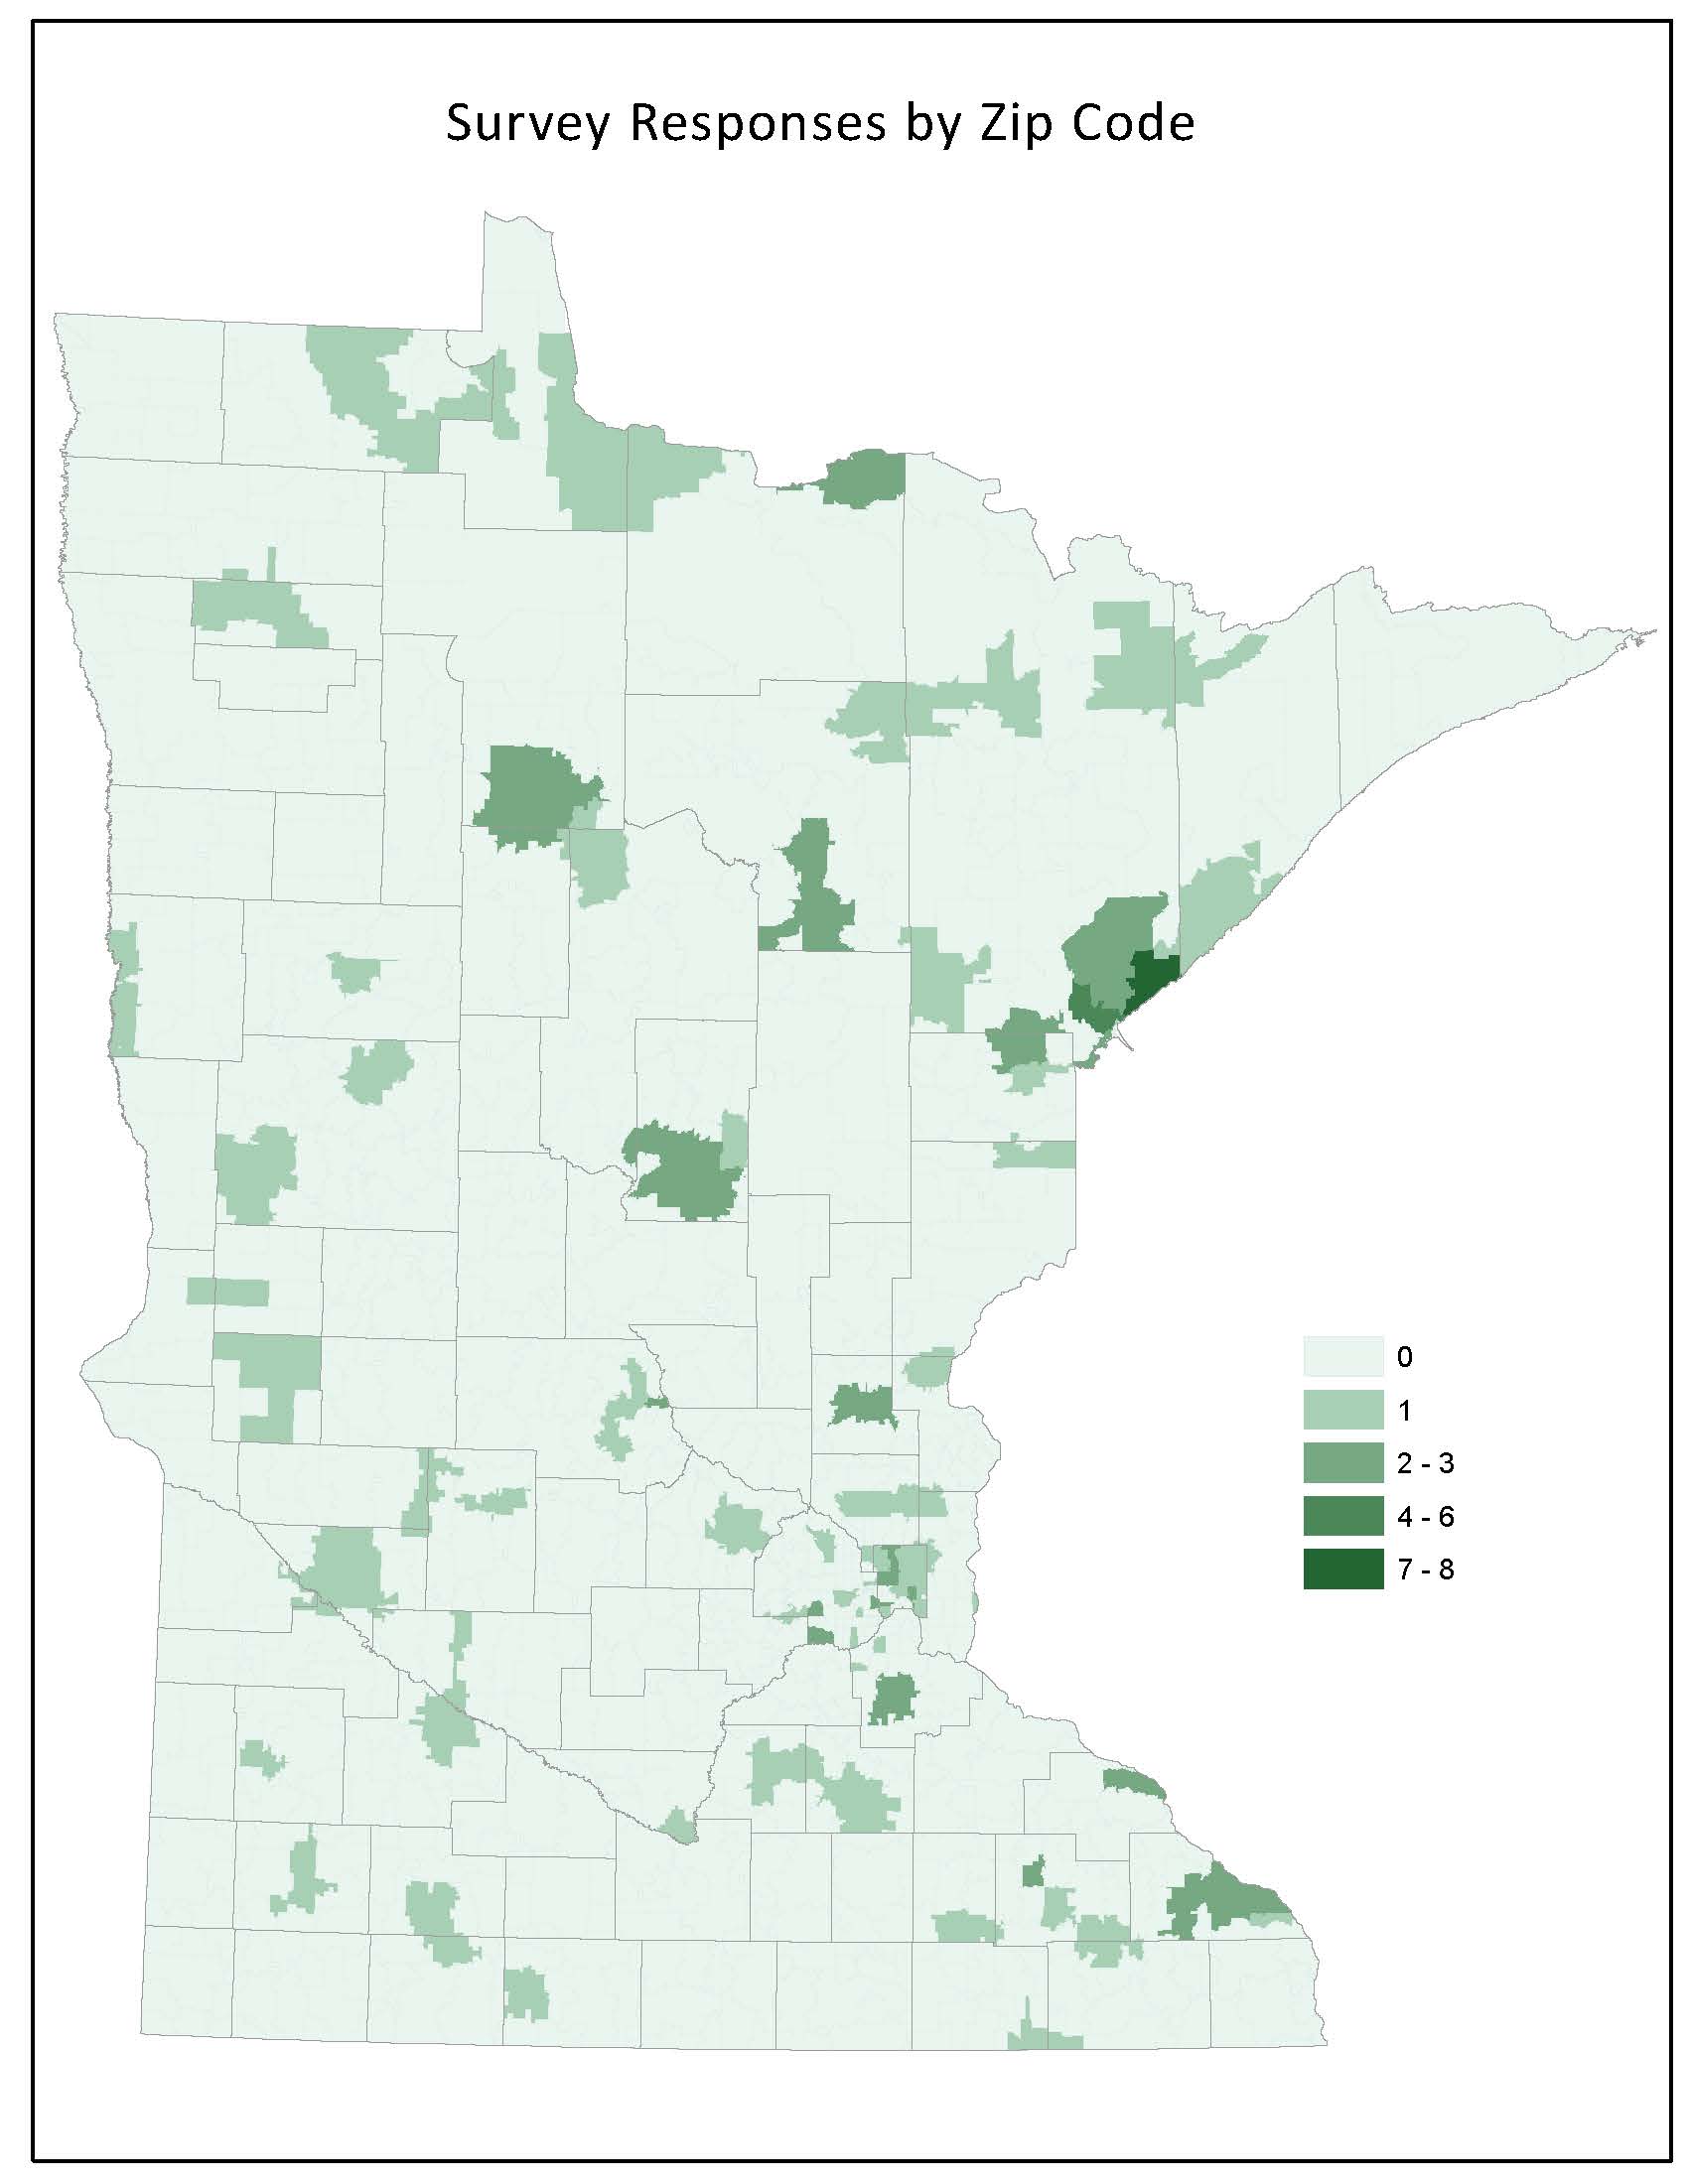 Minnesota map of survey responses by zip code.